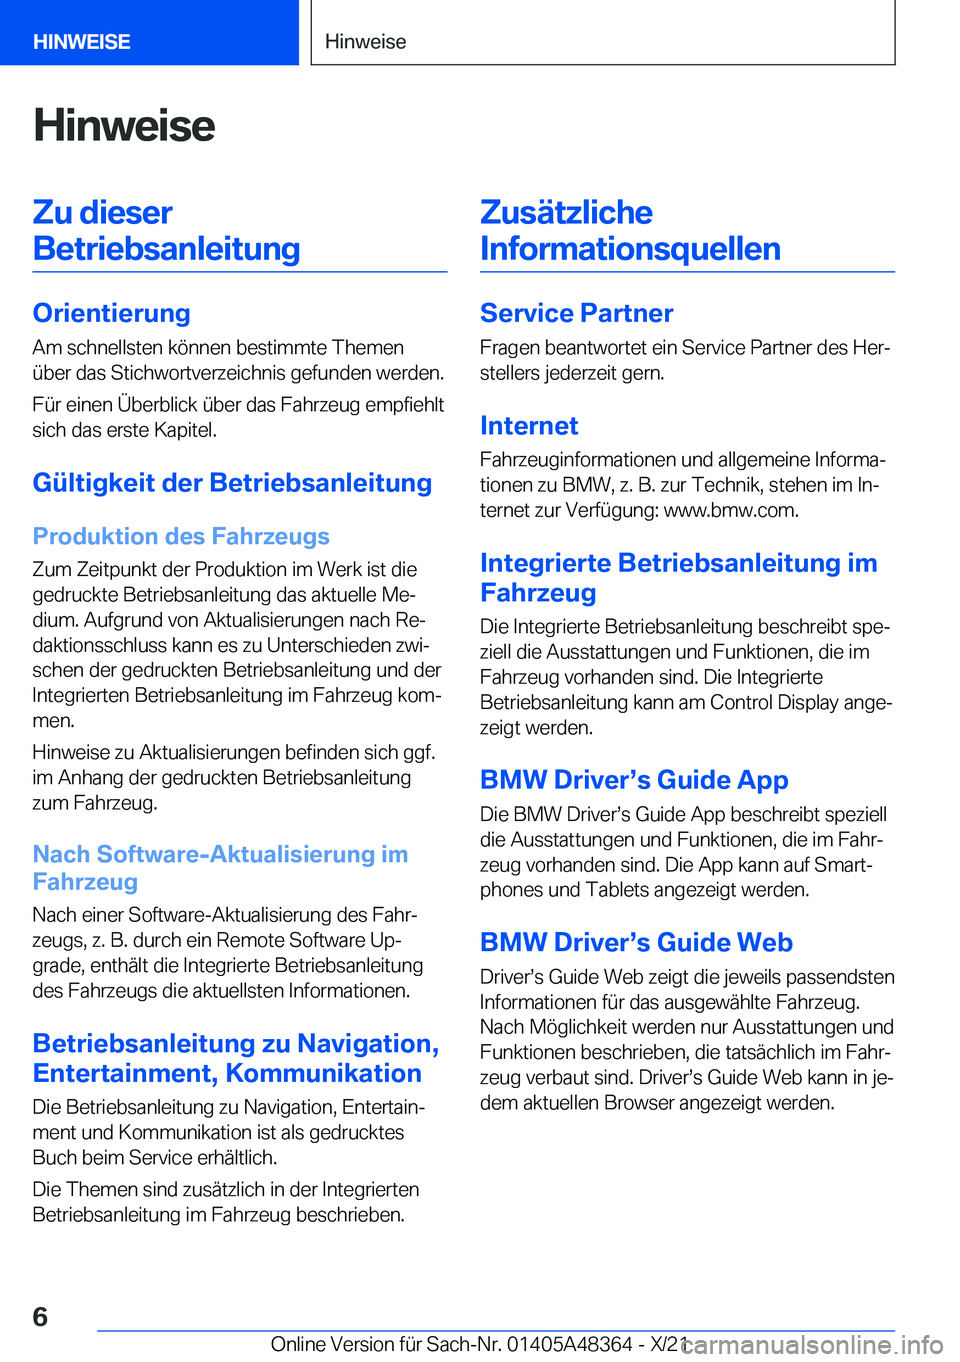 BMW X4 2022  Betriebsanleitungen (in German) �H�i�n�w�e�i�s�e�Z�u��d�i�e�s�e�r�B�e�t�r�i�e�b�s�a�n�l�e�i�t�u�n�g
�O�r�i�e�n�t�i�e�r�u�n�g �A�m��s�c�h�n�e�l�l�s�t�e�n��k�